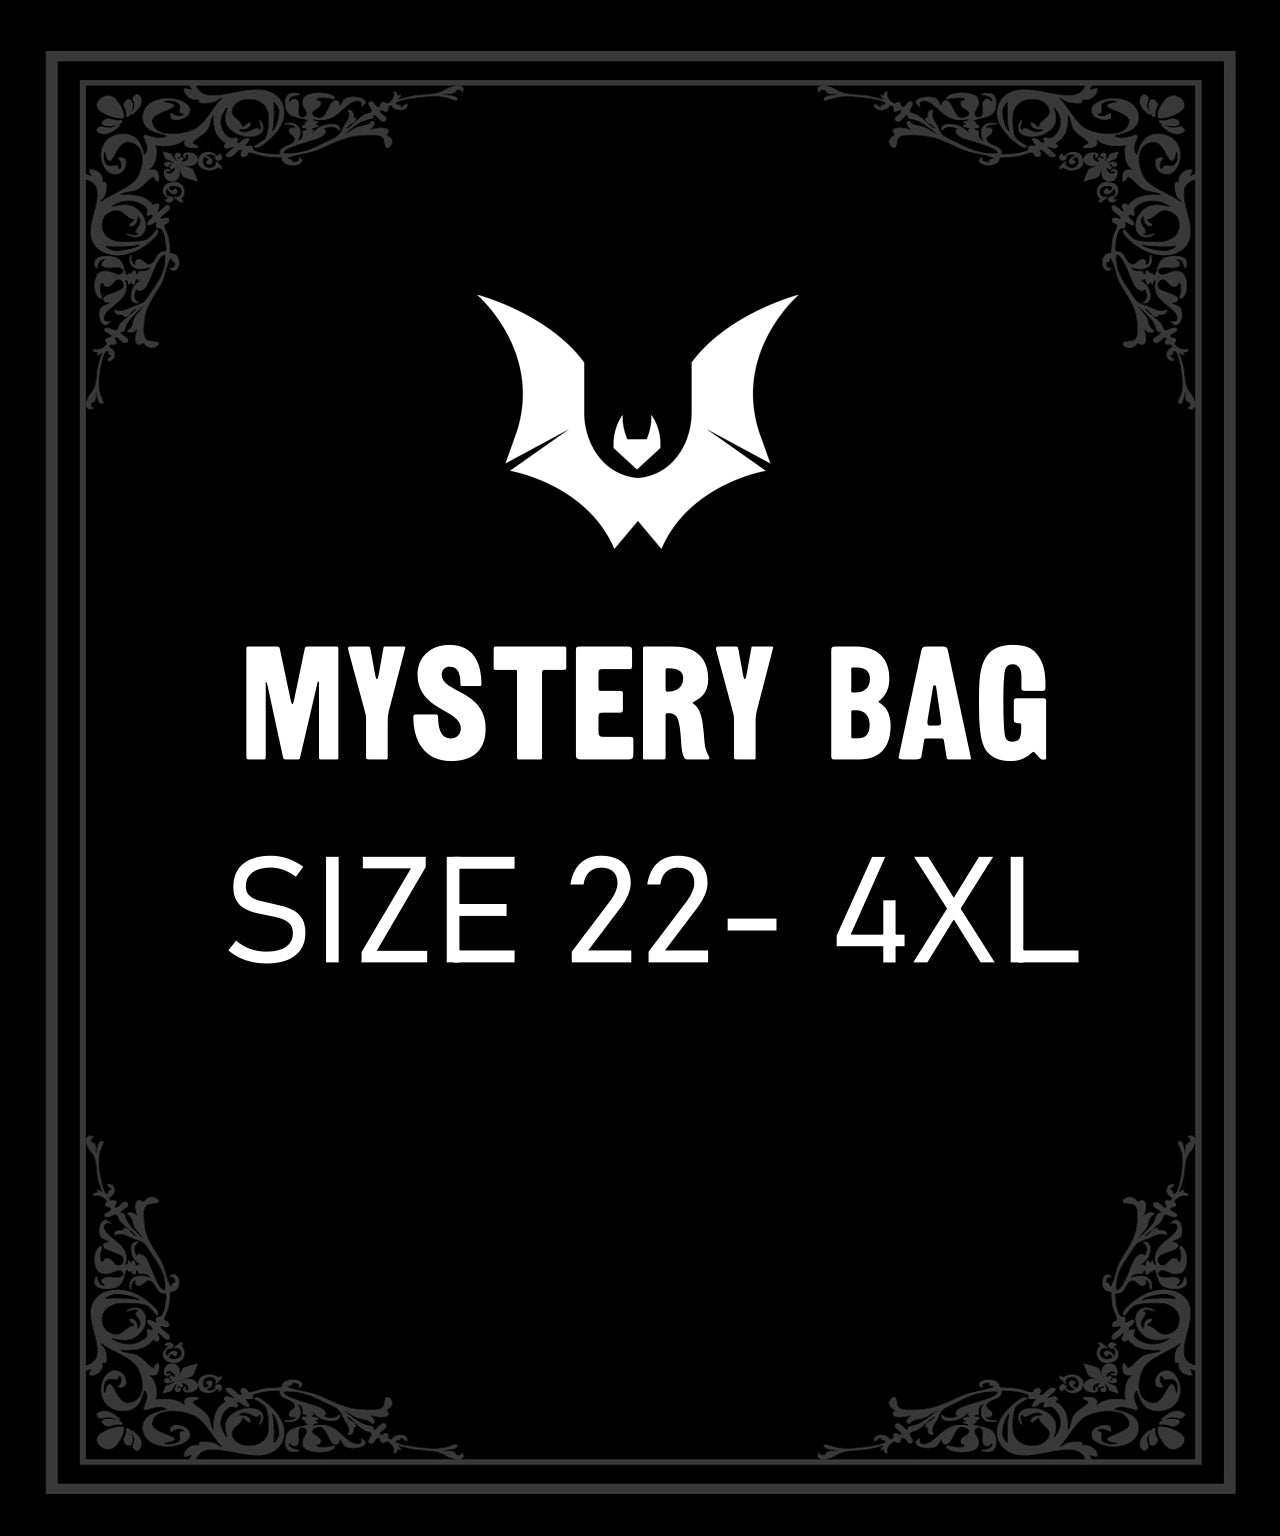 4XL Mystery Bag